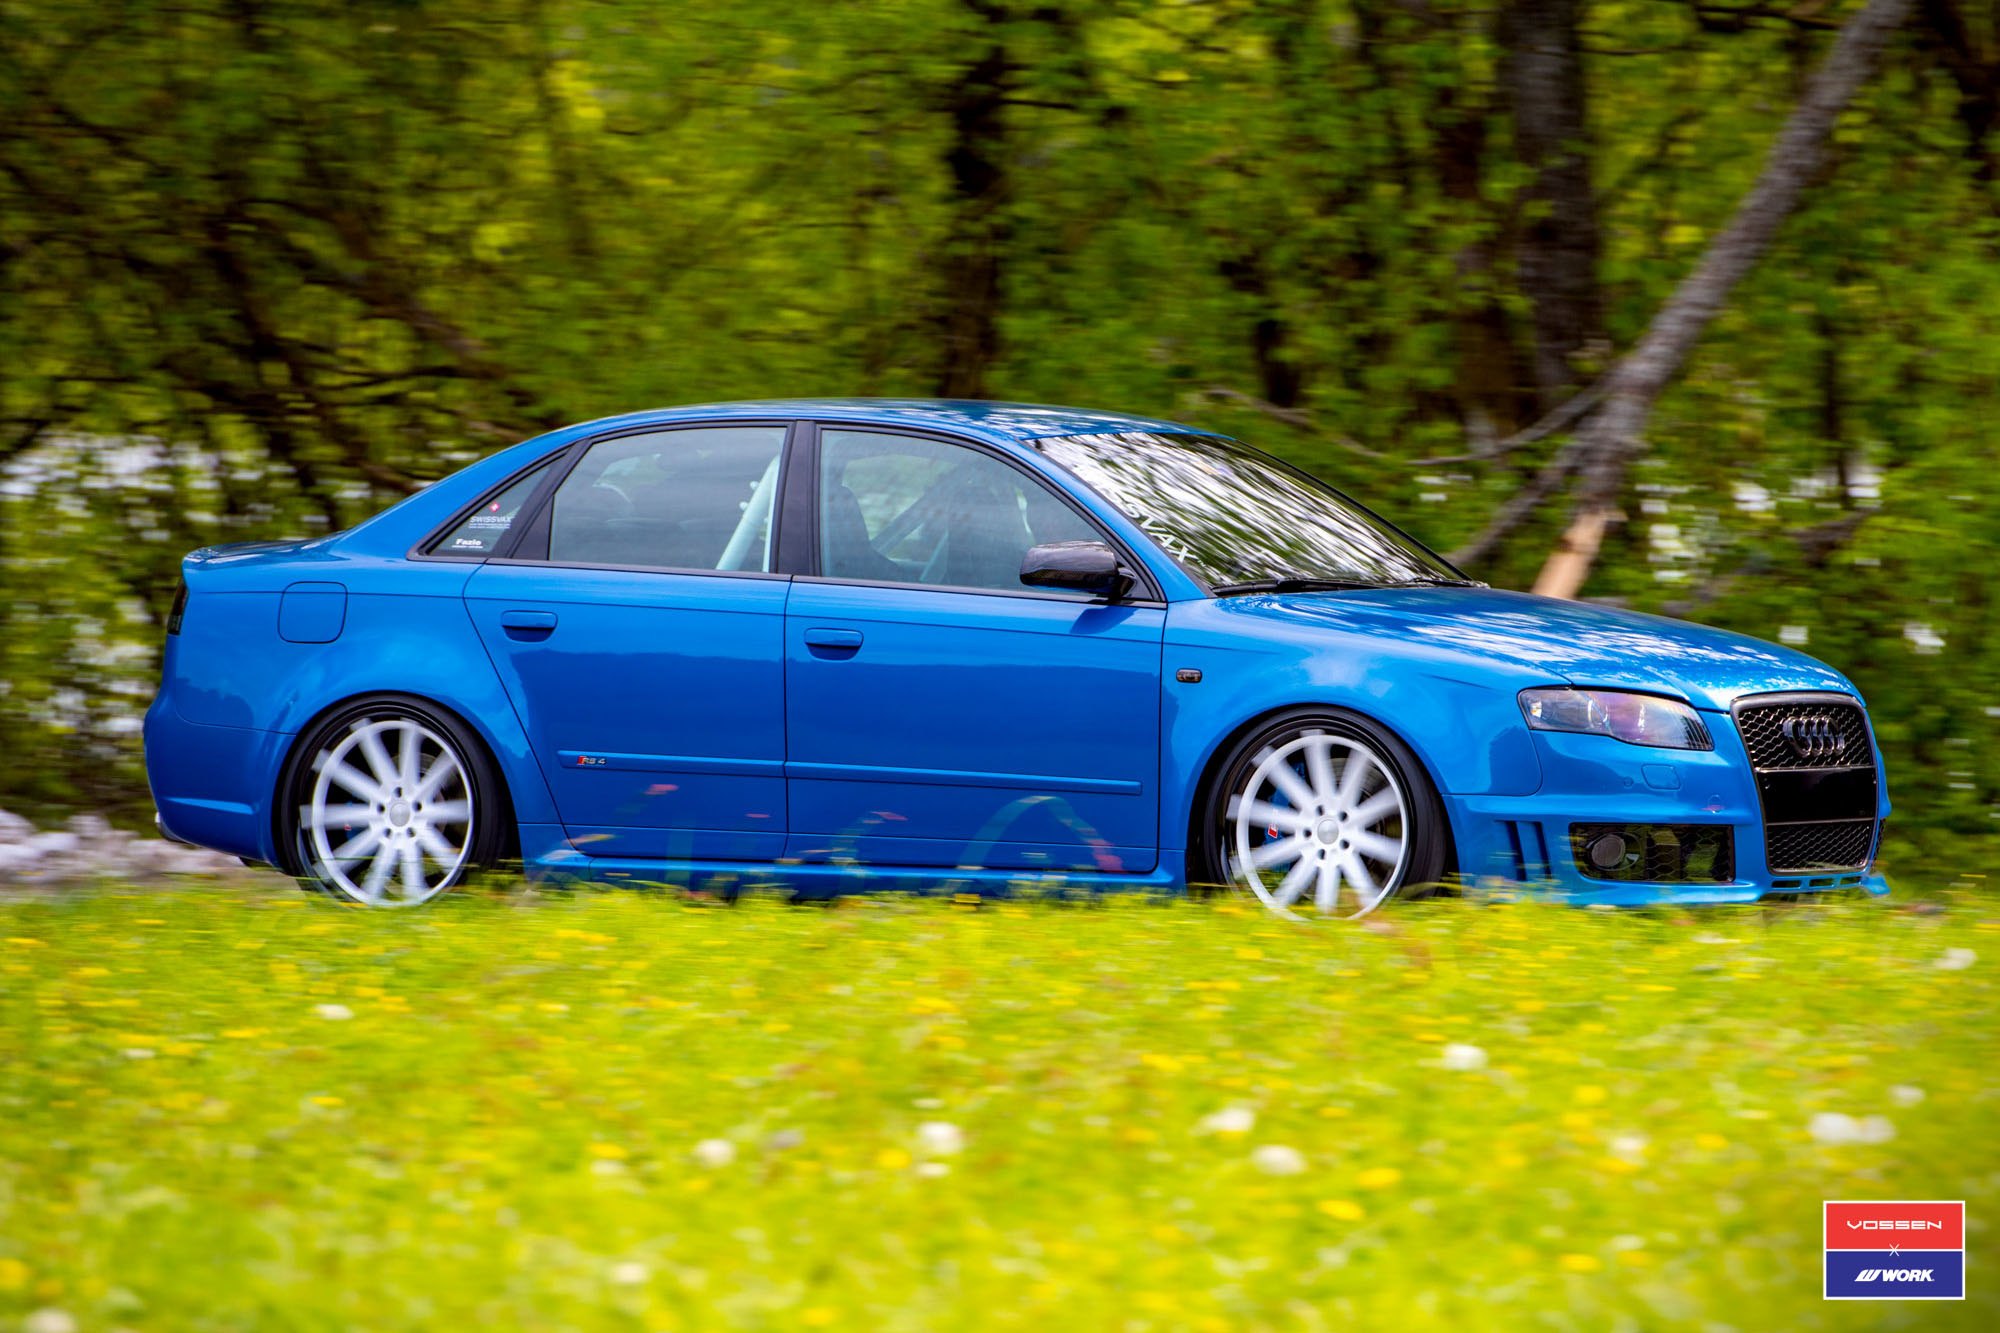 Vossen Wheels on Custom Blue Audi S4 - Photo by Vossen